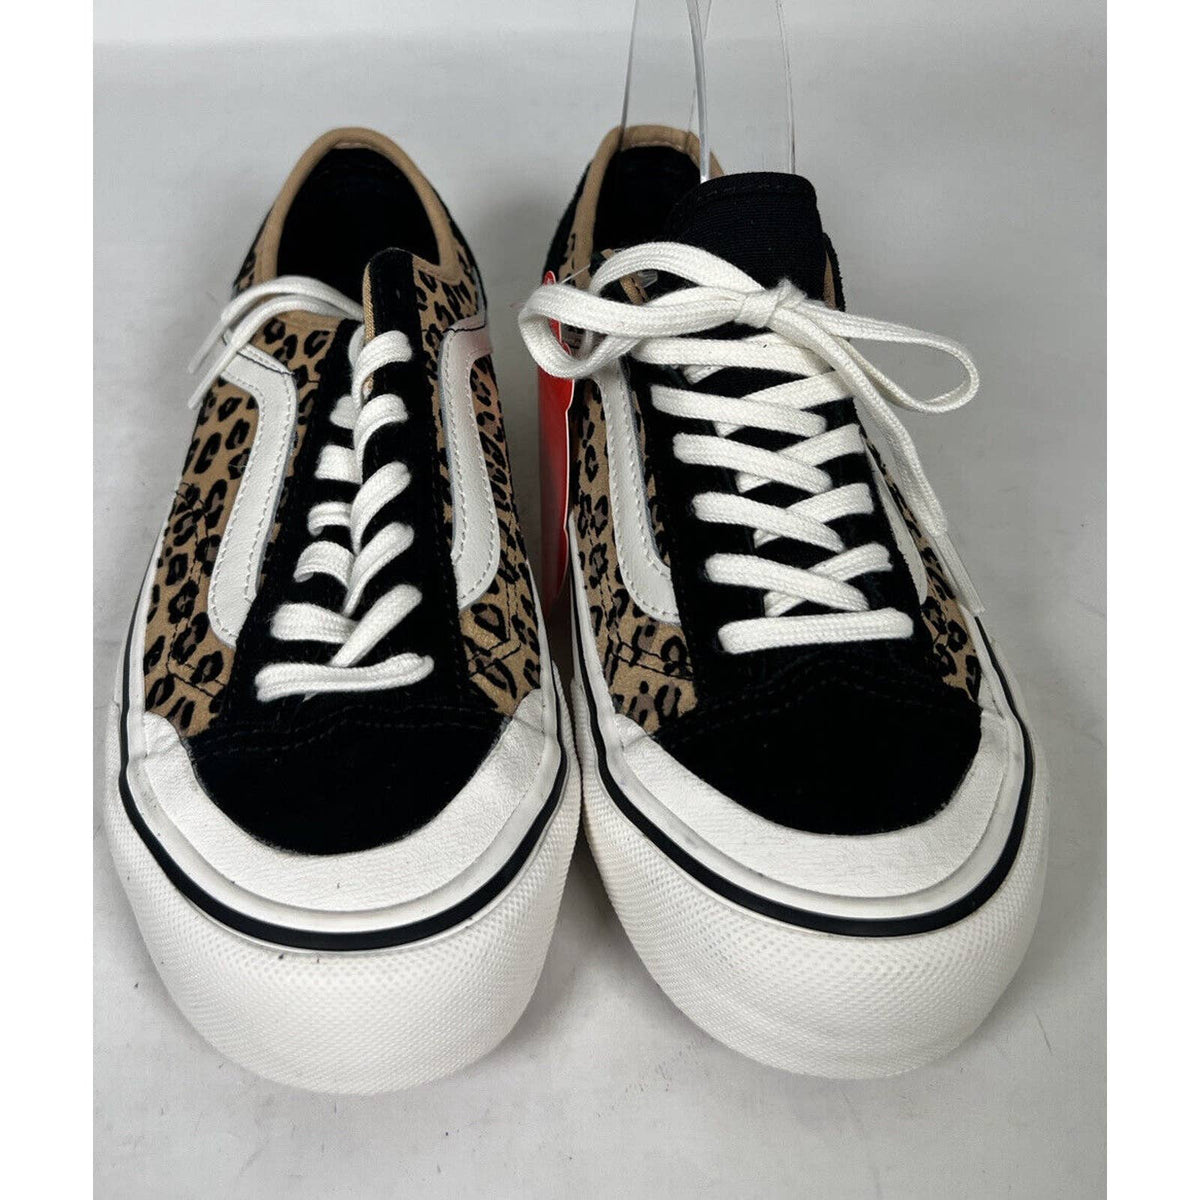 Vans Style 36 Decon SF ‘Mini Leopard’ Sneakers Sz.6.5 NEW